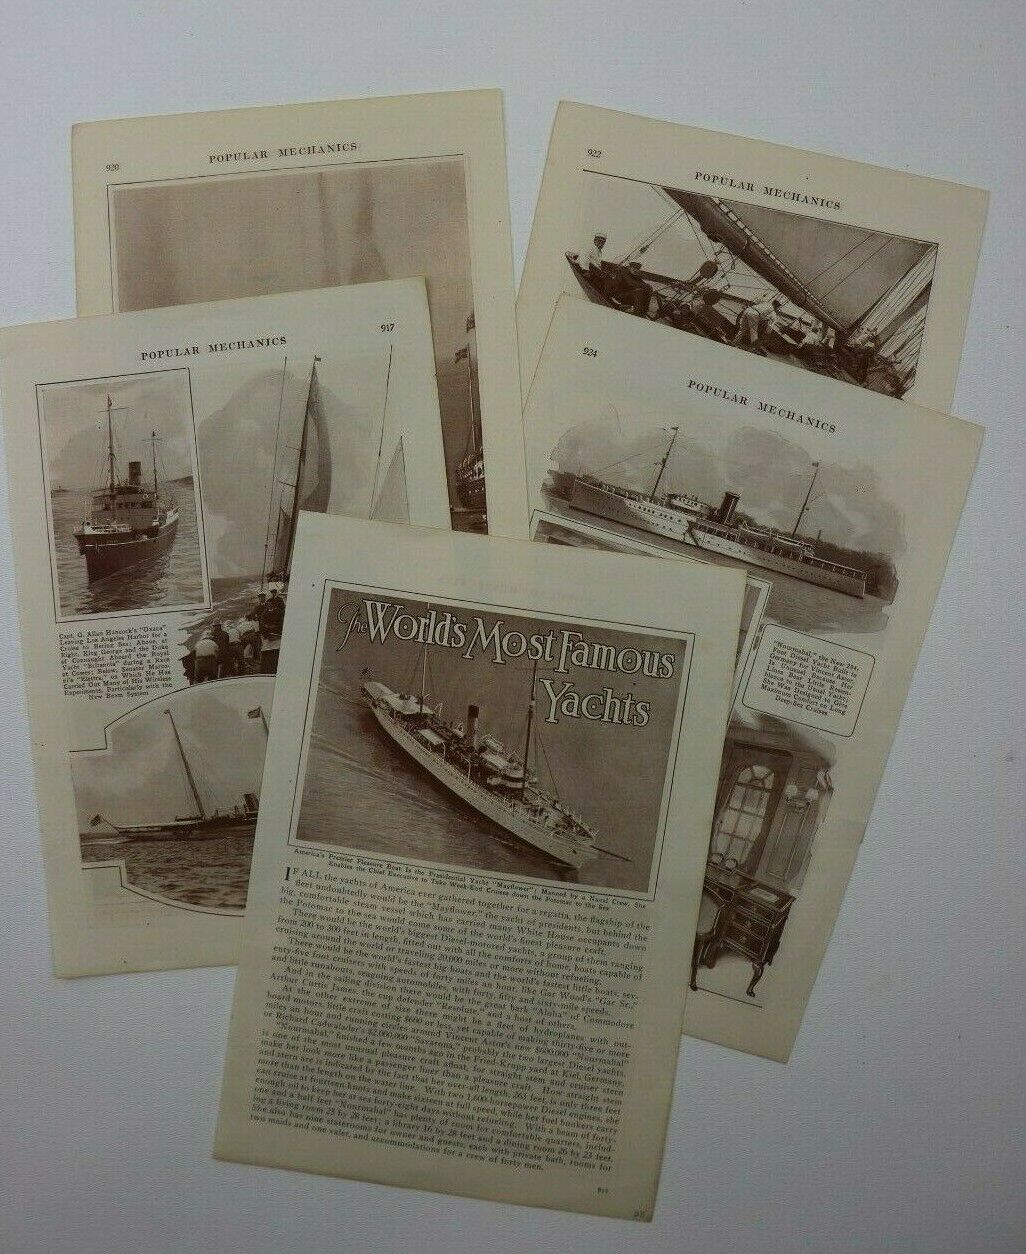 Popular Mechanics The World Famous Yachts 1928 Vintage Magazine Article Print 